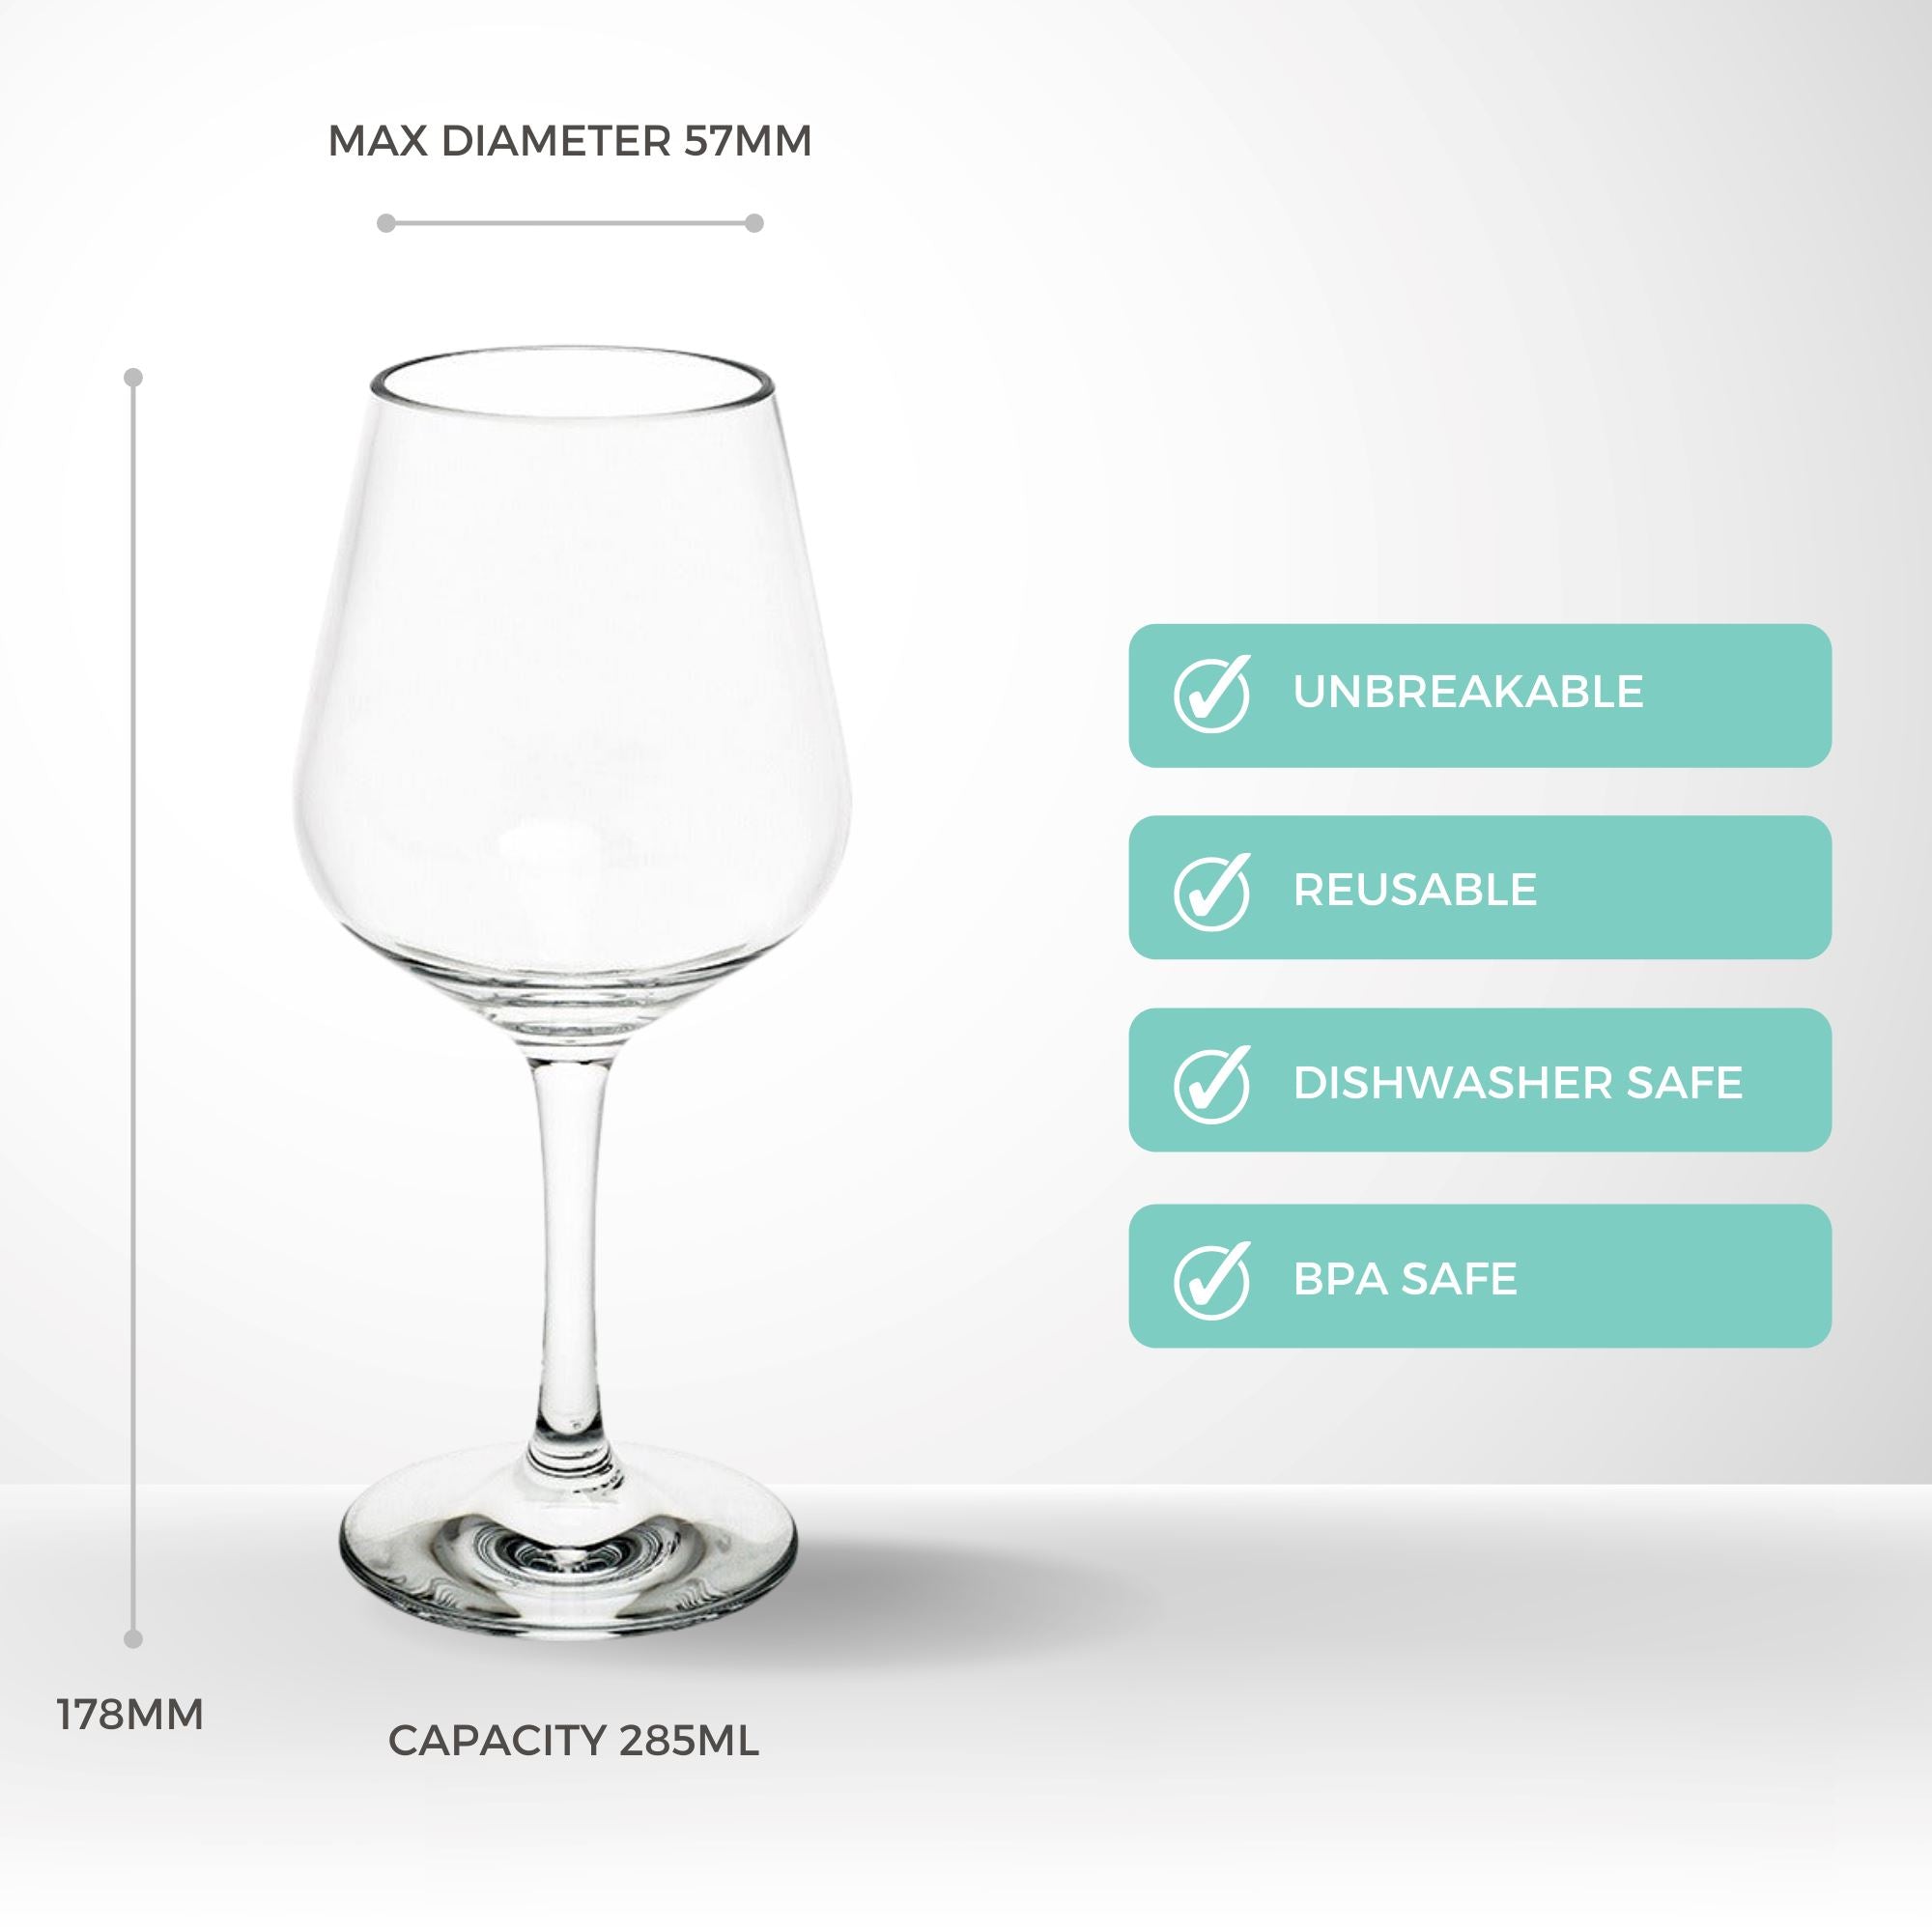 Unbreakable Hybrid Wine Glass 285ml - Set of 4 Wine Glass D-STILL Drinkware 